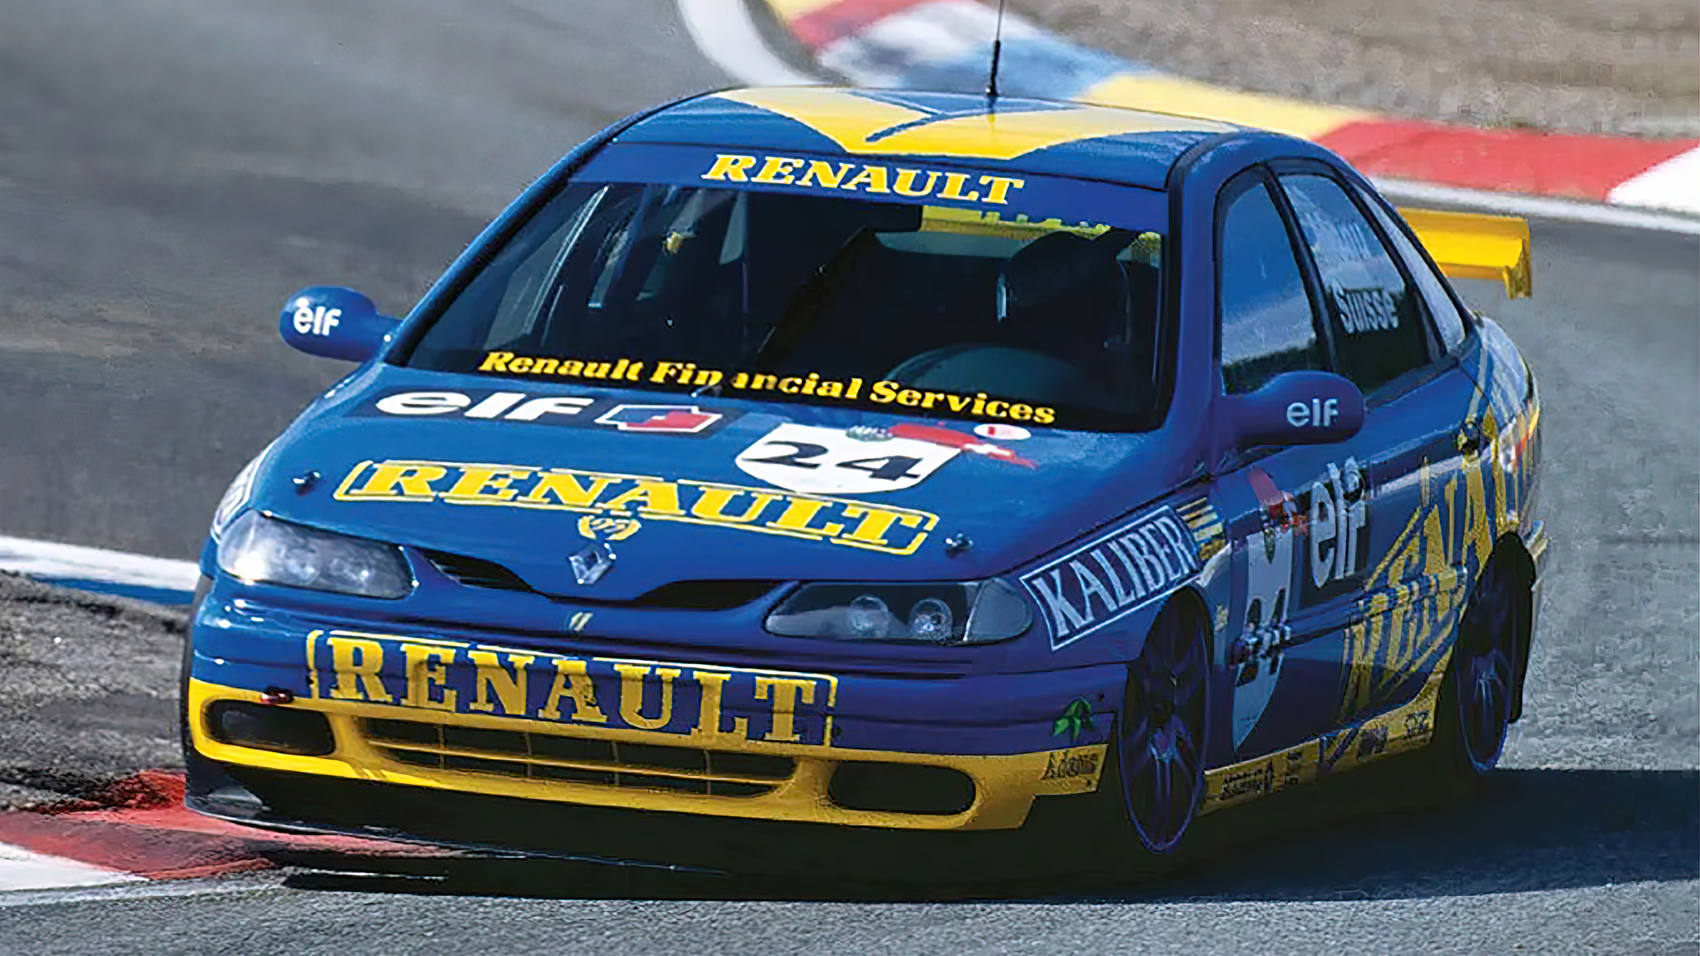 Renault Laguna BTCC